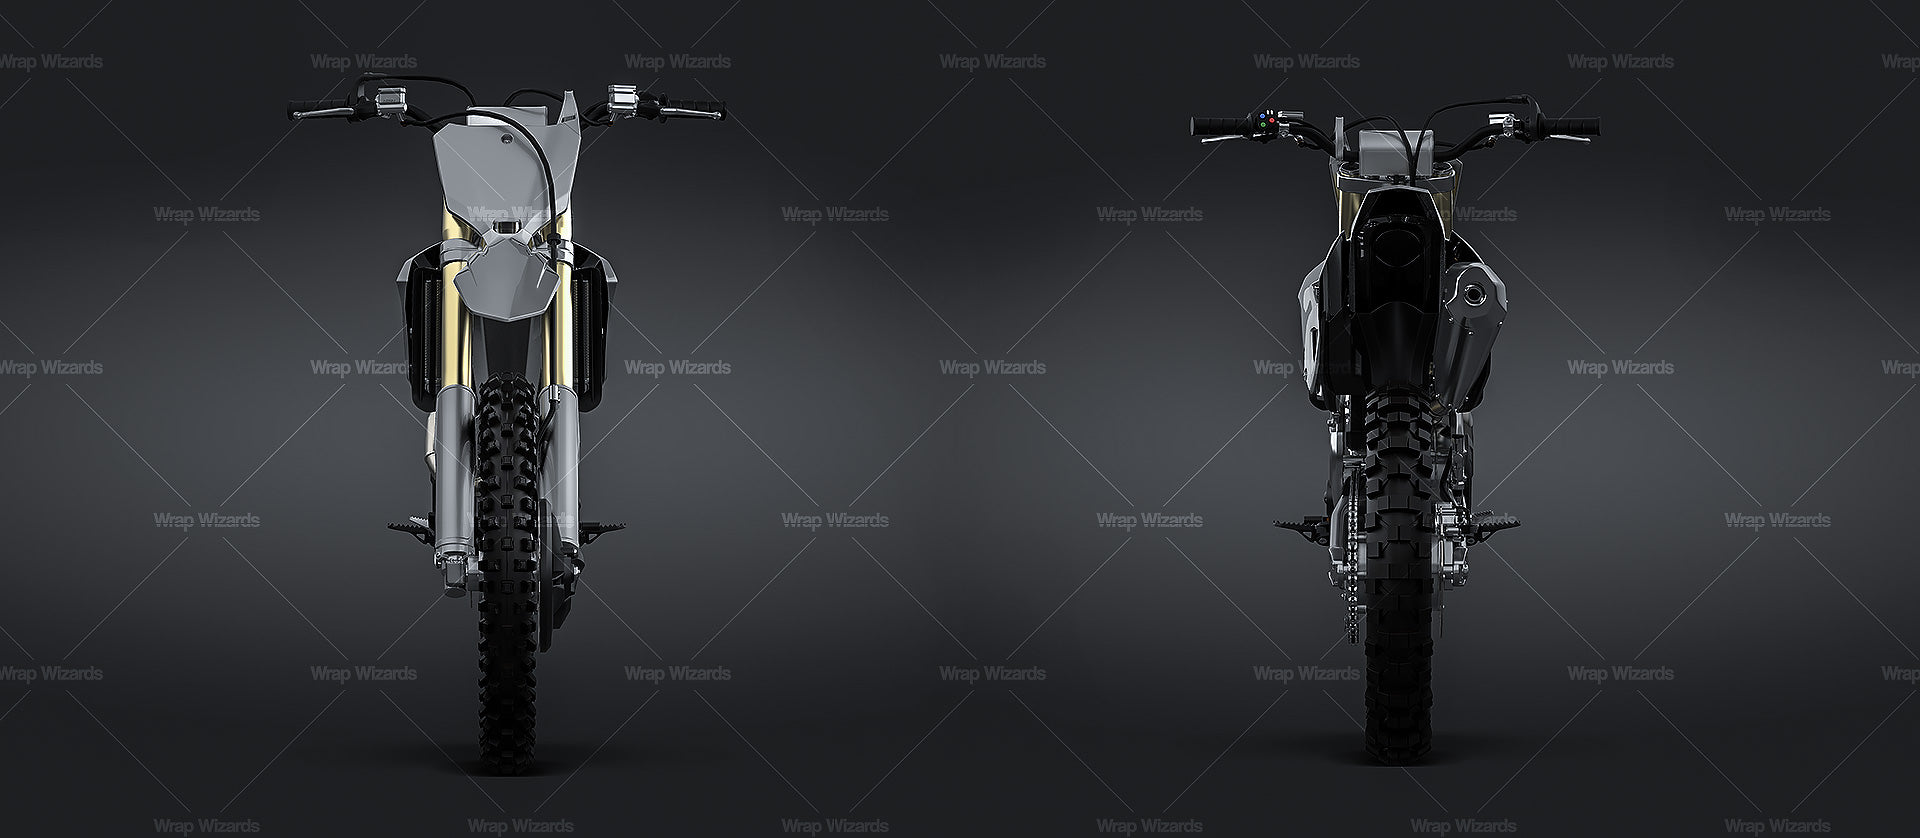 Honda CRF450R 2021 Motocross - Motorcycle Mockup